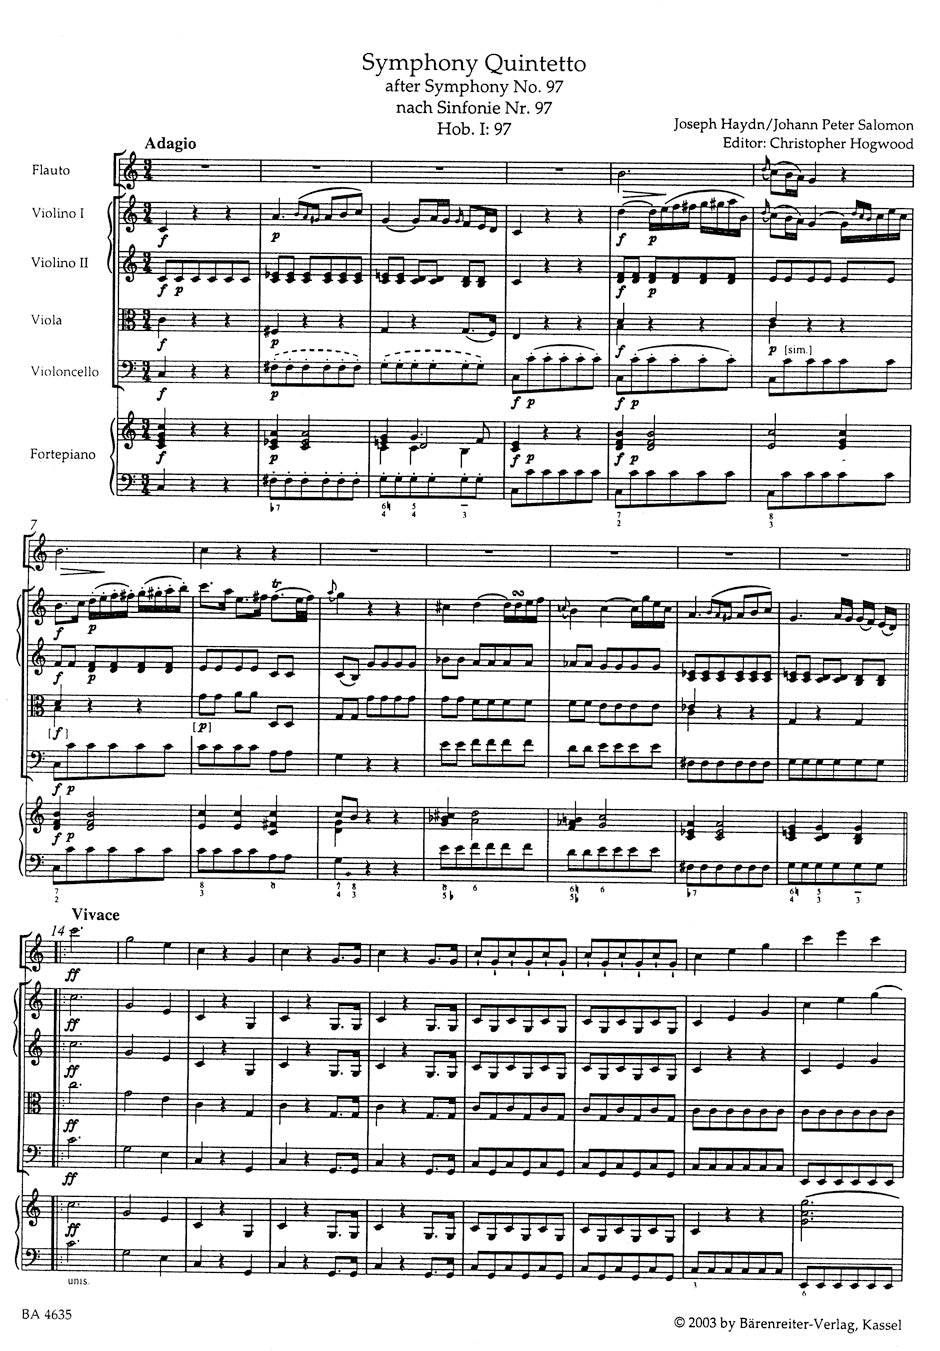 Haydn Symphony No 97 Arranged for Flute, String Quartet and Piano ad lib